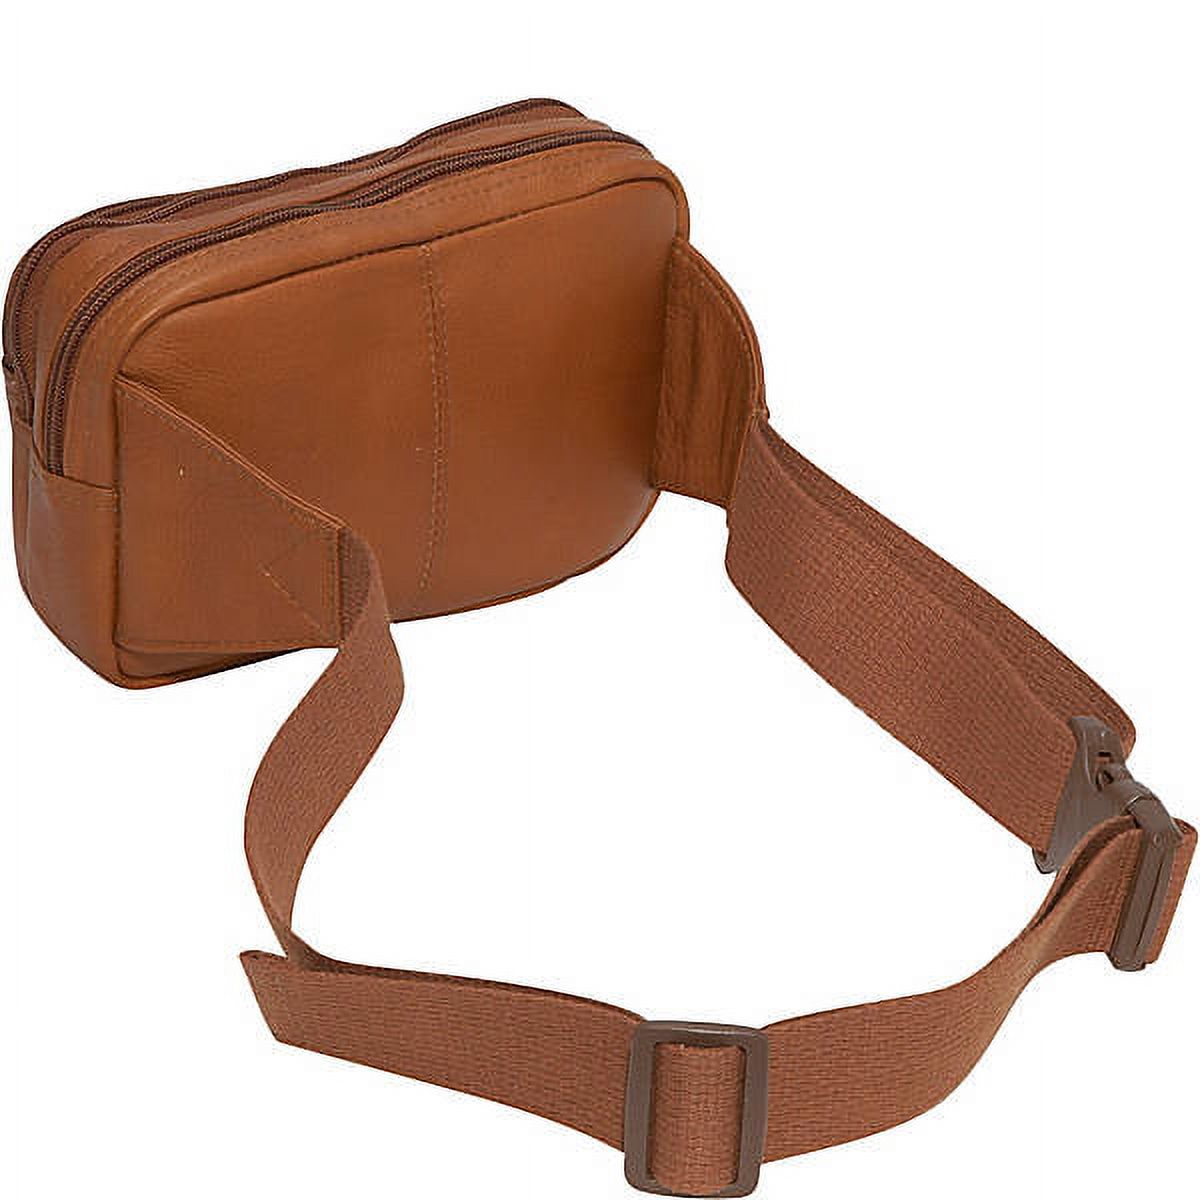 Le Donne Leather Four Compartment Waist Bag LD-9114 - image 3 of 4